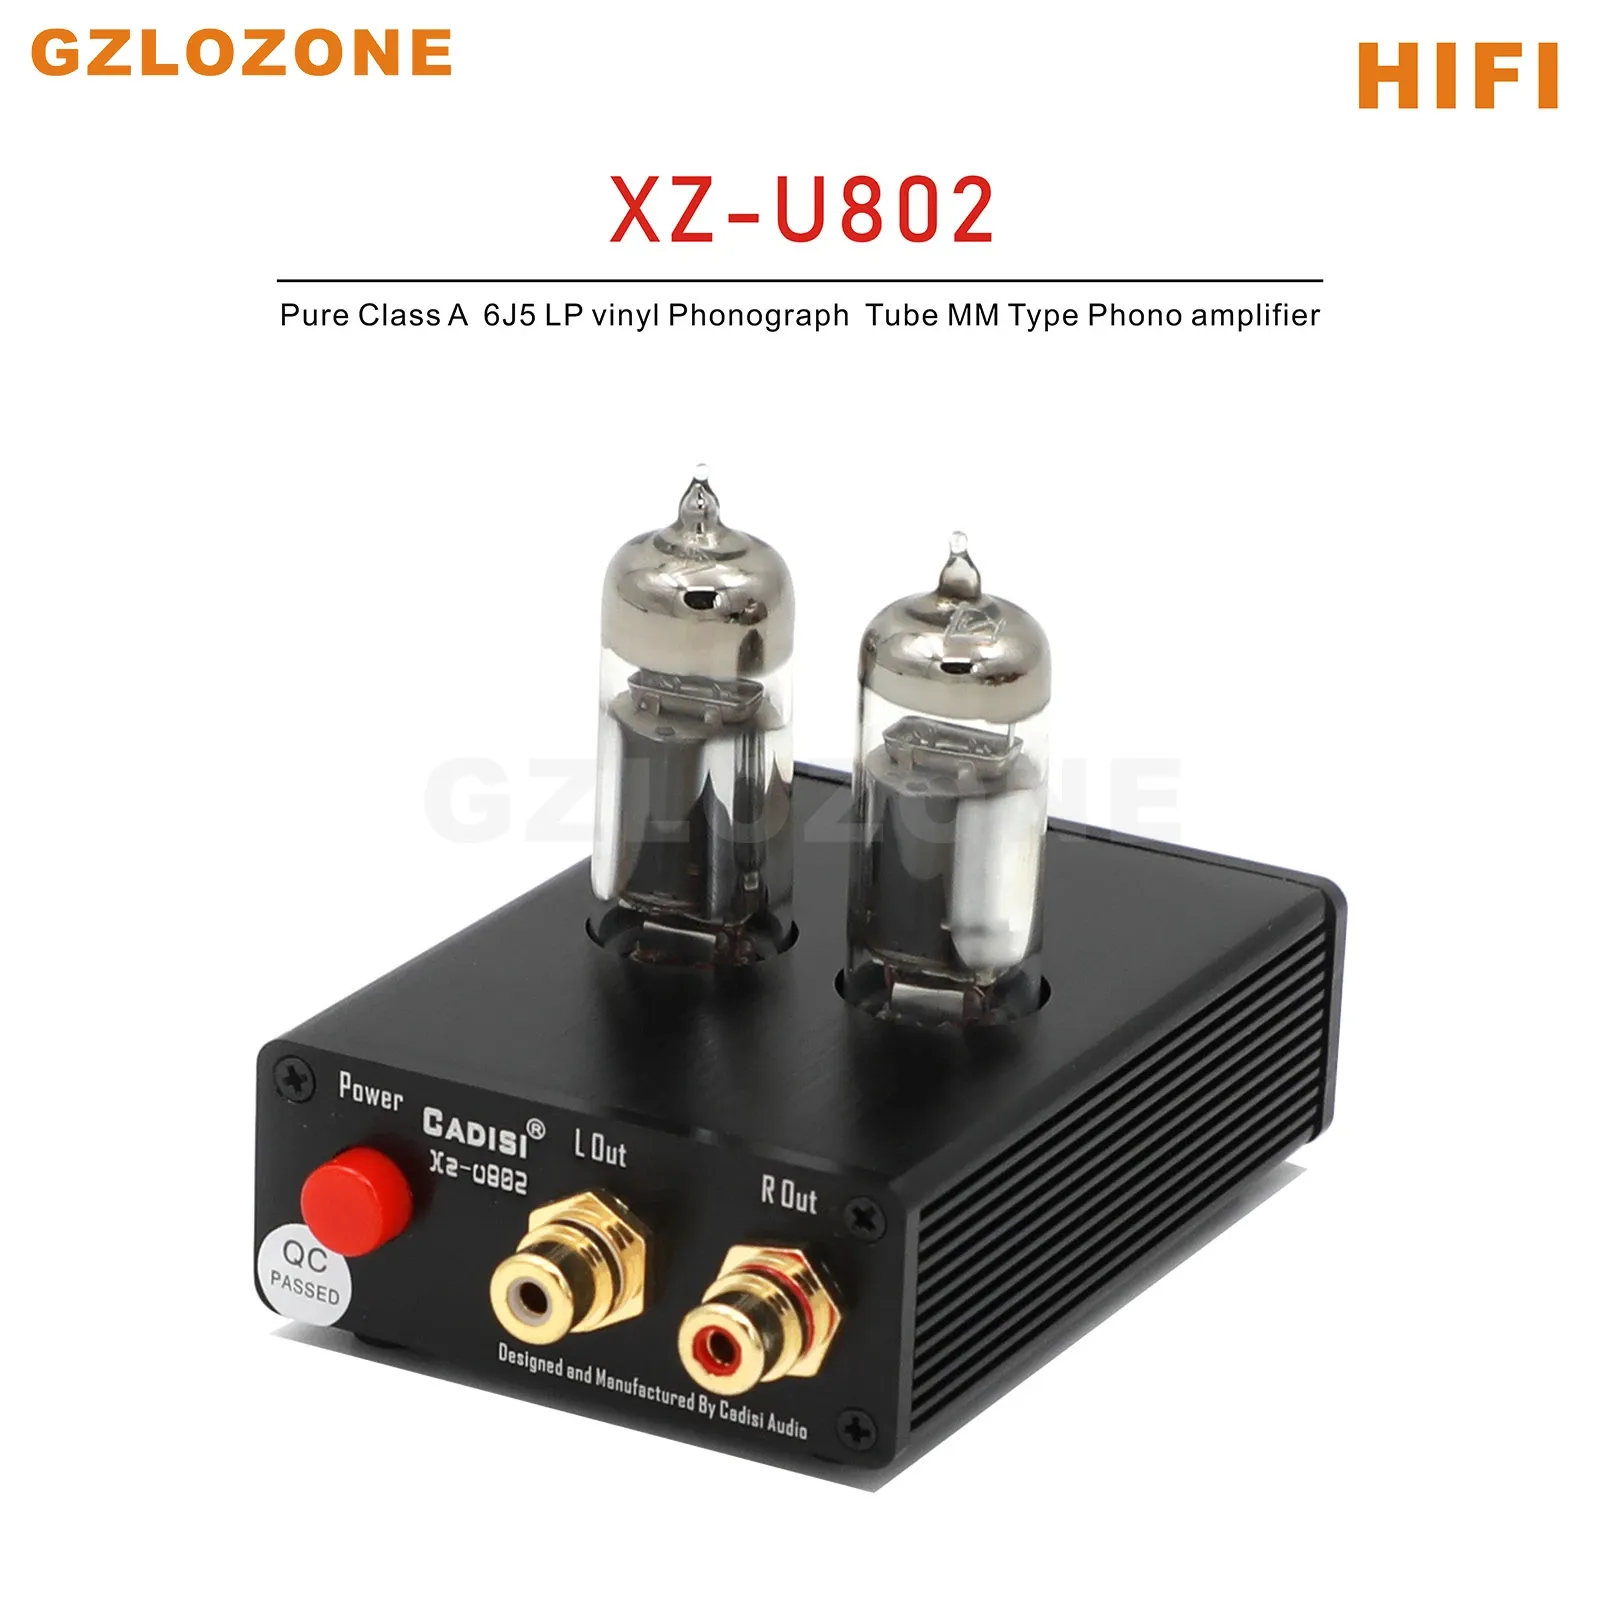 Amplificateur XZU802 HIFI 6J5 Tube MM Type Phono Amplificateur Pure Classe A LP Préamplificateur de phonographe en vinyle LP